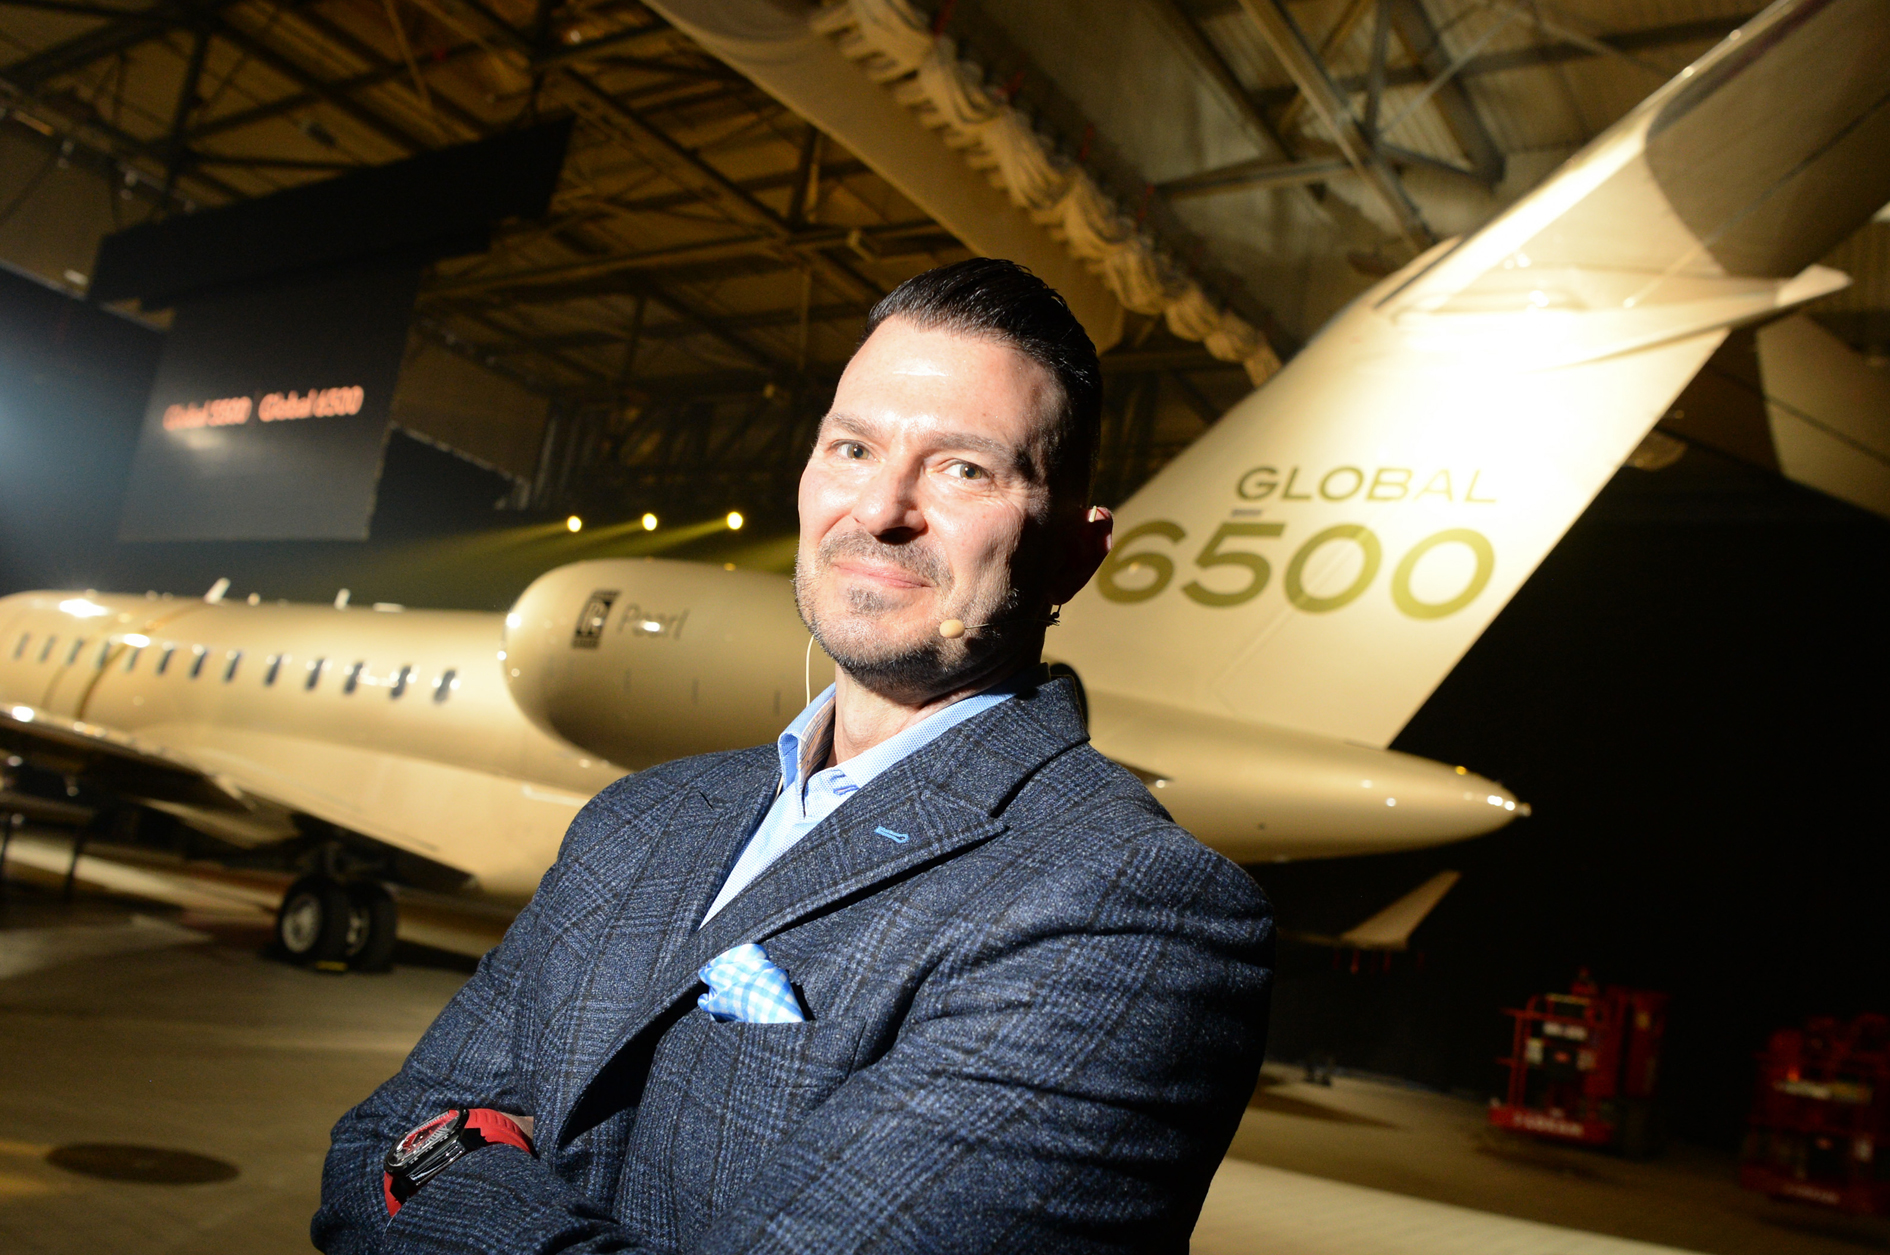 Авиационный прокат. Bombardier Global 6500. Самолёт Бомбардье 6500. Bombardier Business. Ares Bombardier Global 6500.